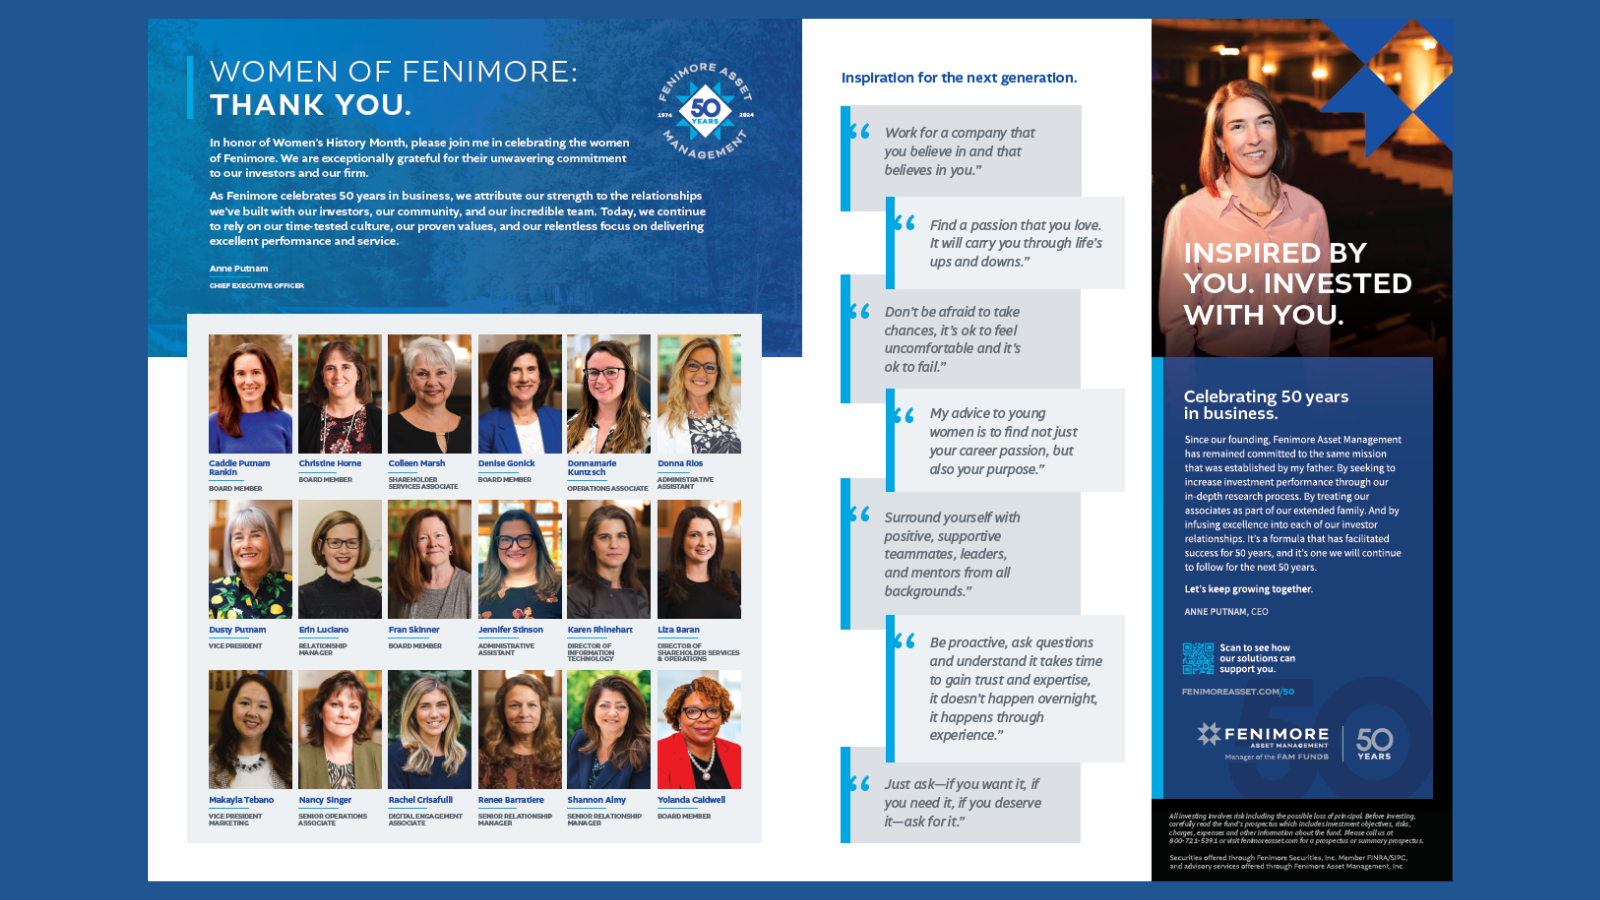 Celebrating the Women of Fenimore